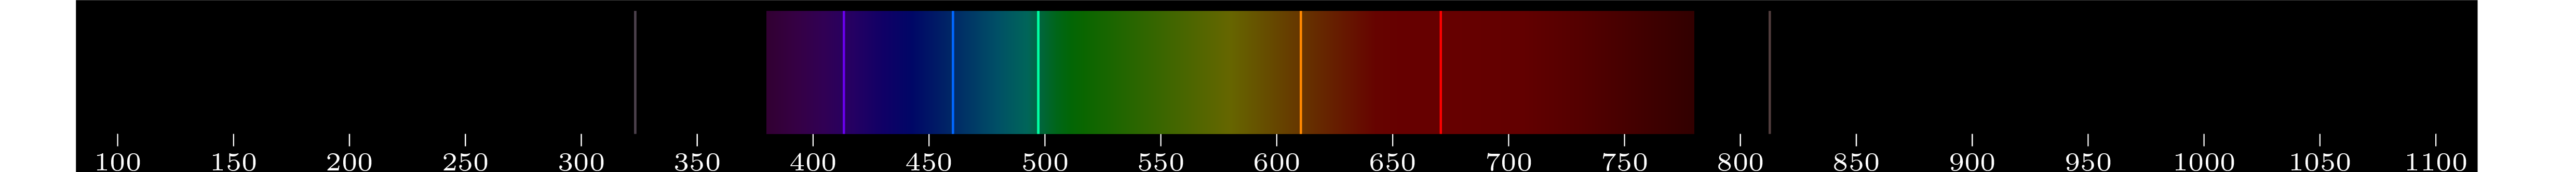 emmision spectra of element Li